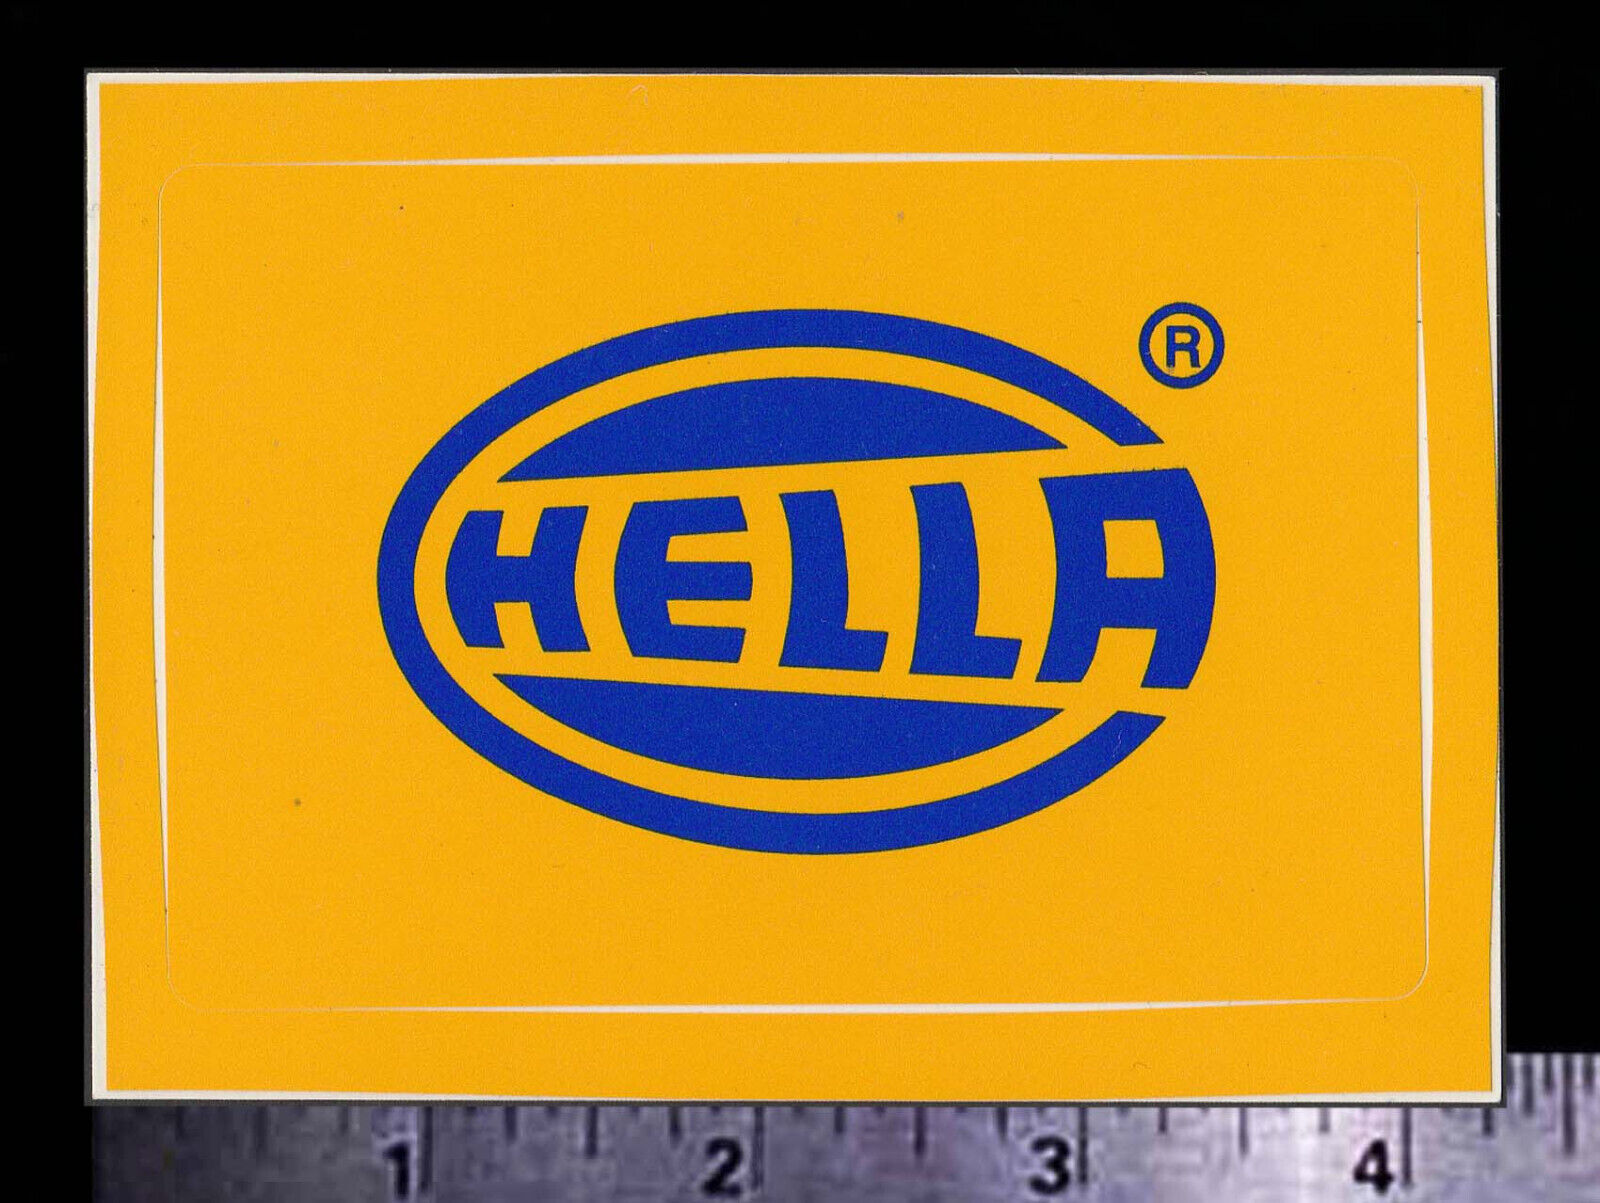 HELLA Lights - Original Vintage 1980's Racing Decal/Sticker